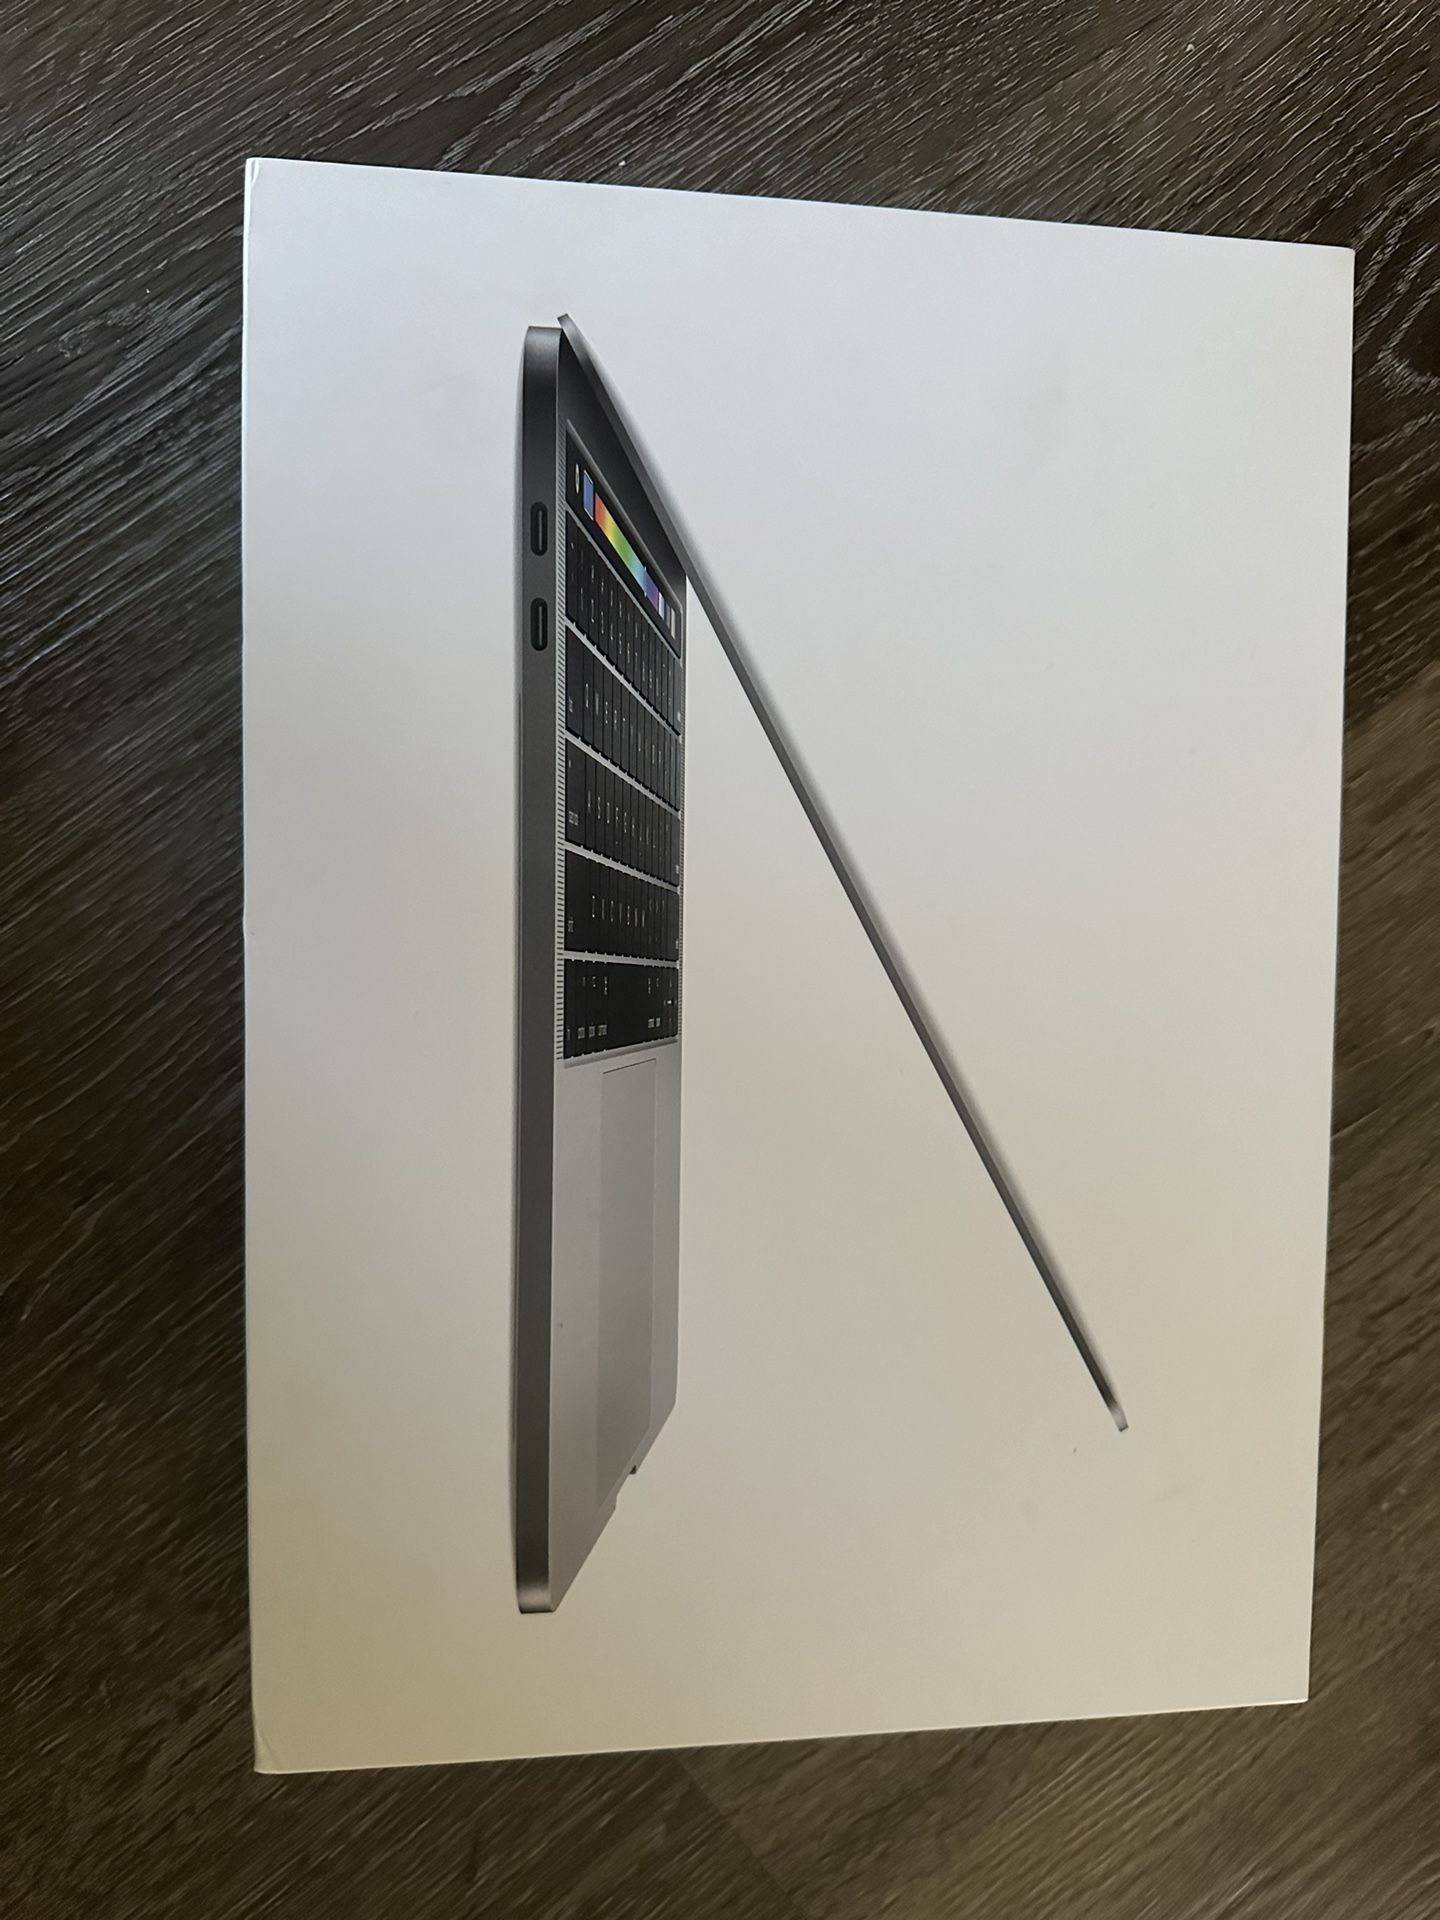 Late 2019 MacBook Pro 13inch W/Touchbar